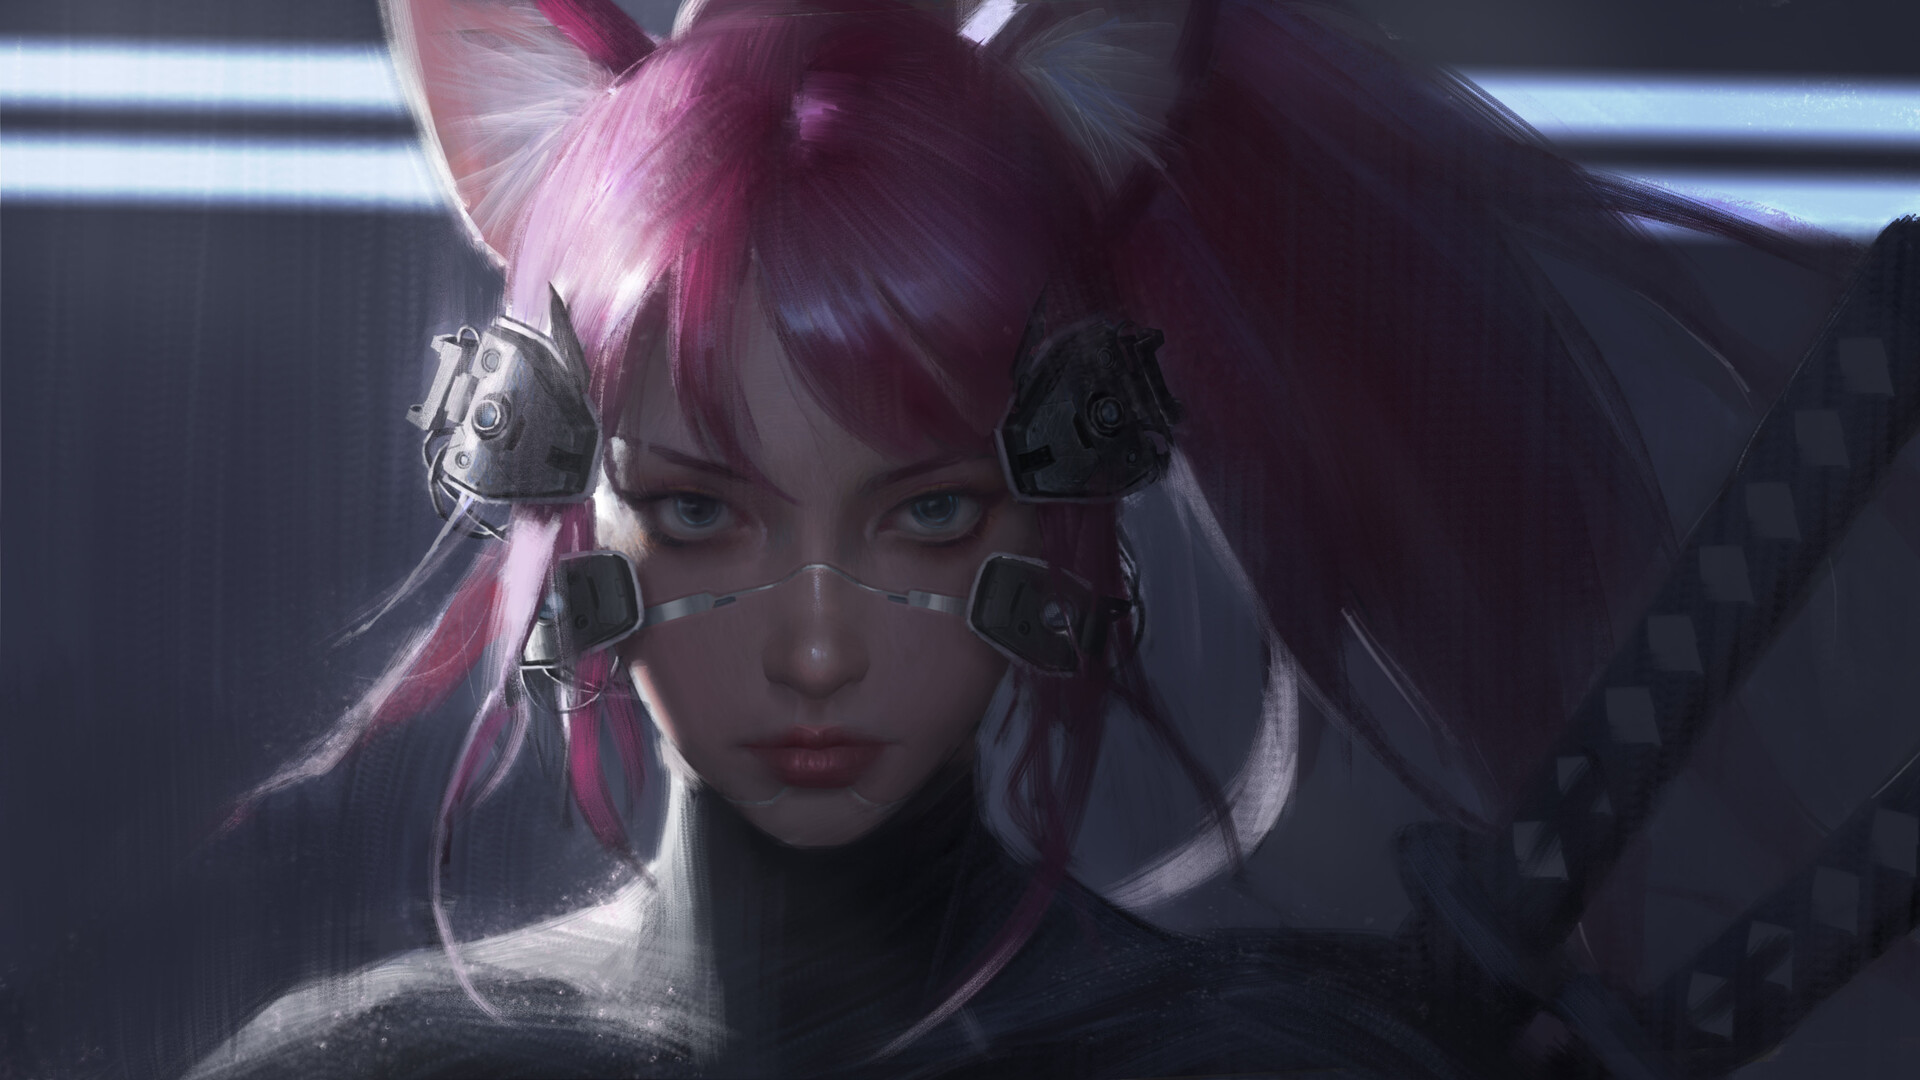 General 1920x1080 Yuhong Ding drawing women cyberpunk cat girl pink hair ponytail portrait looking at viewer weapon katana